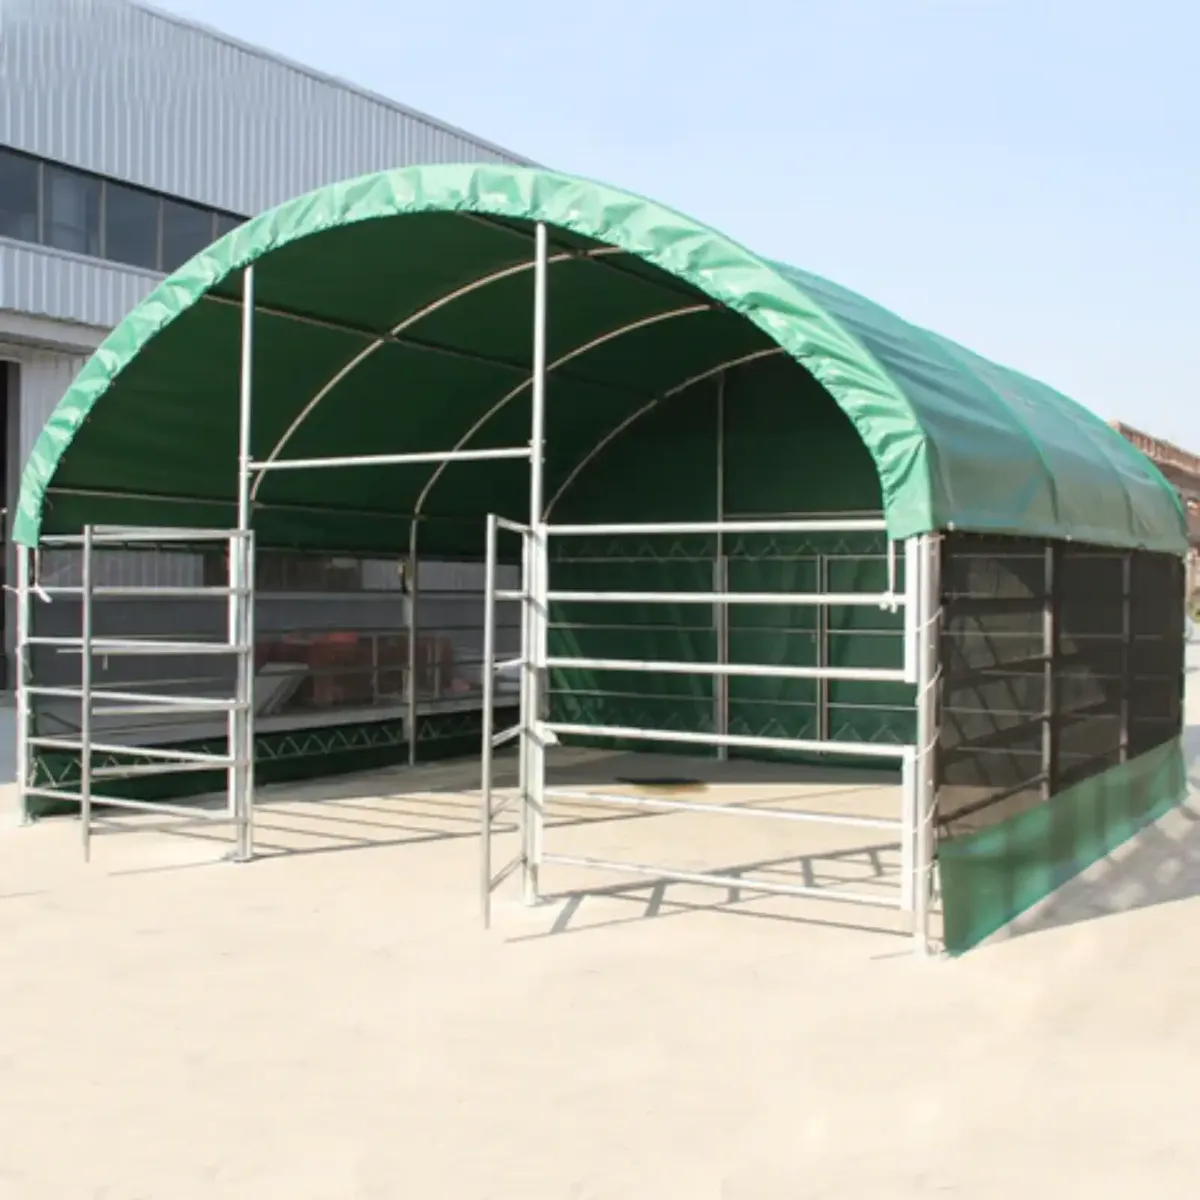 Livestock Shelter 6m x 6m - Image 1